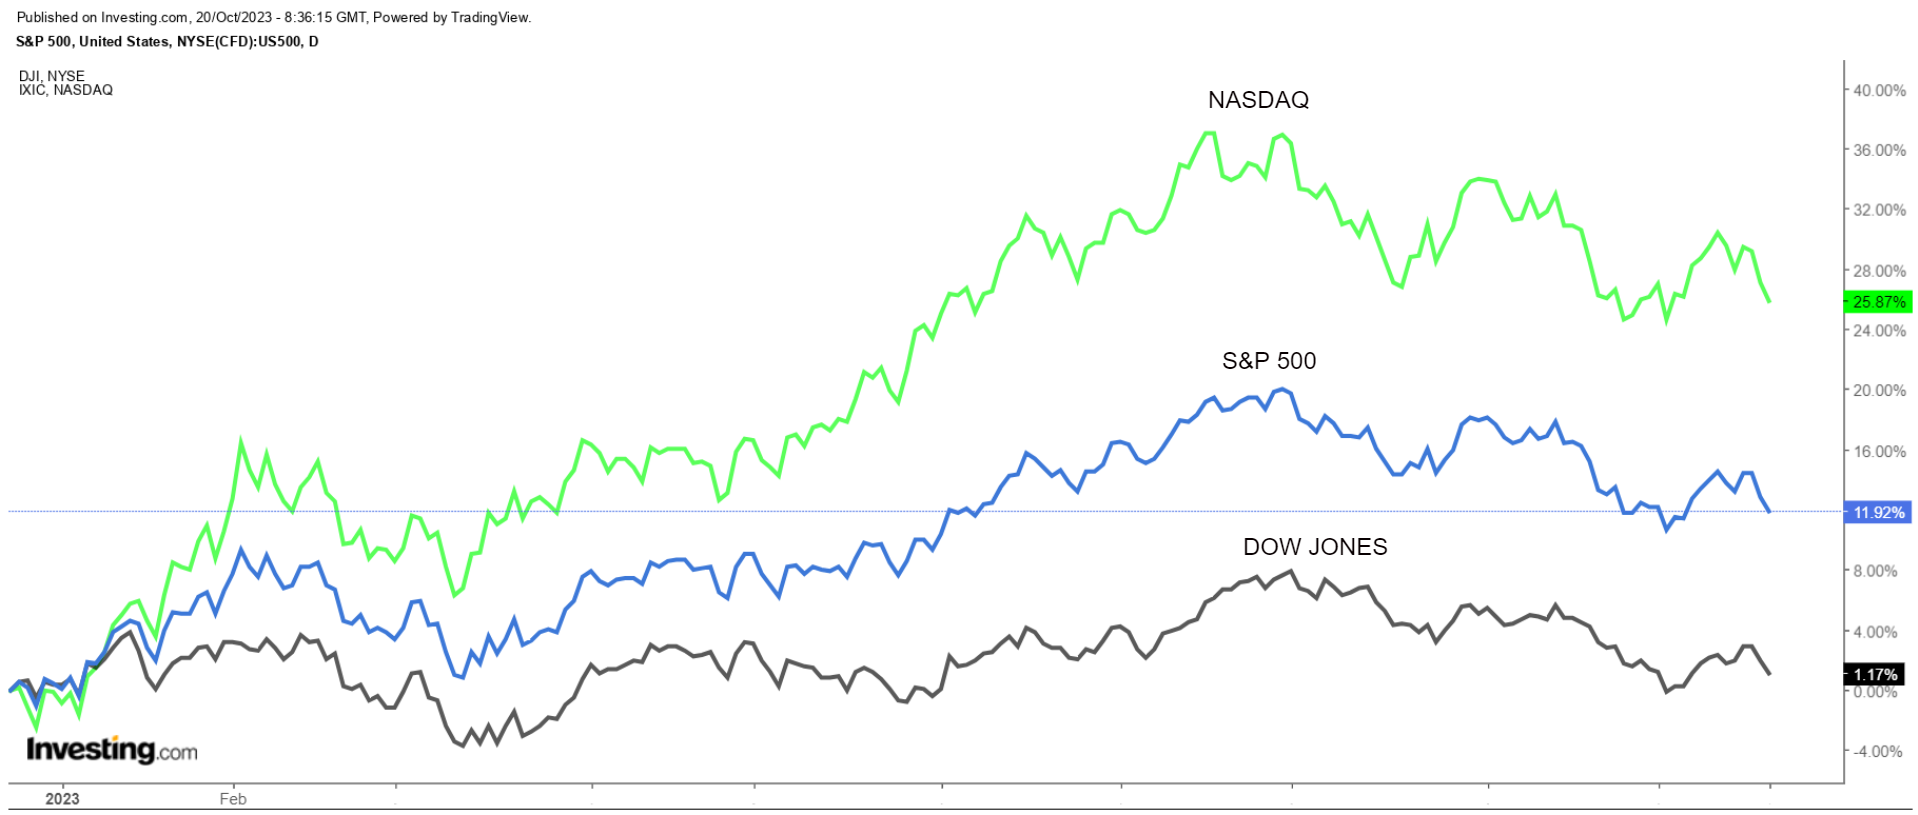 Nasdaq Vs. S&P 500 Vs. Dow Jones